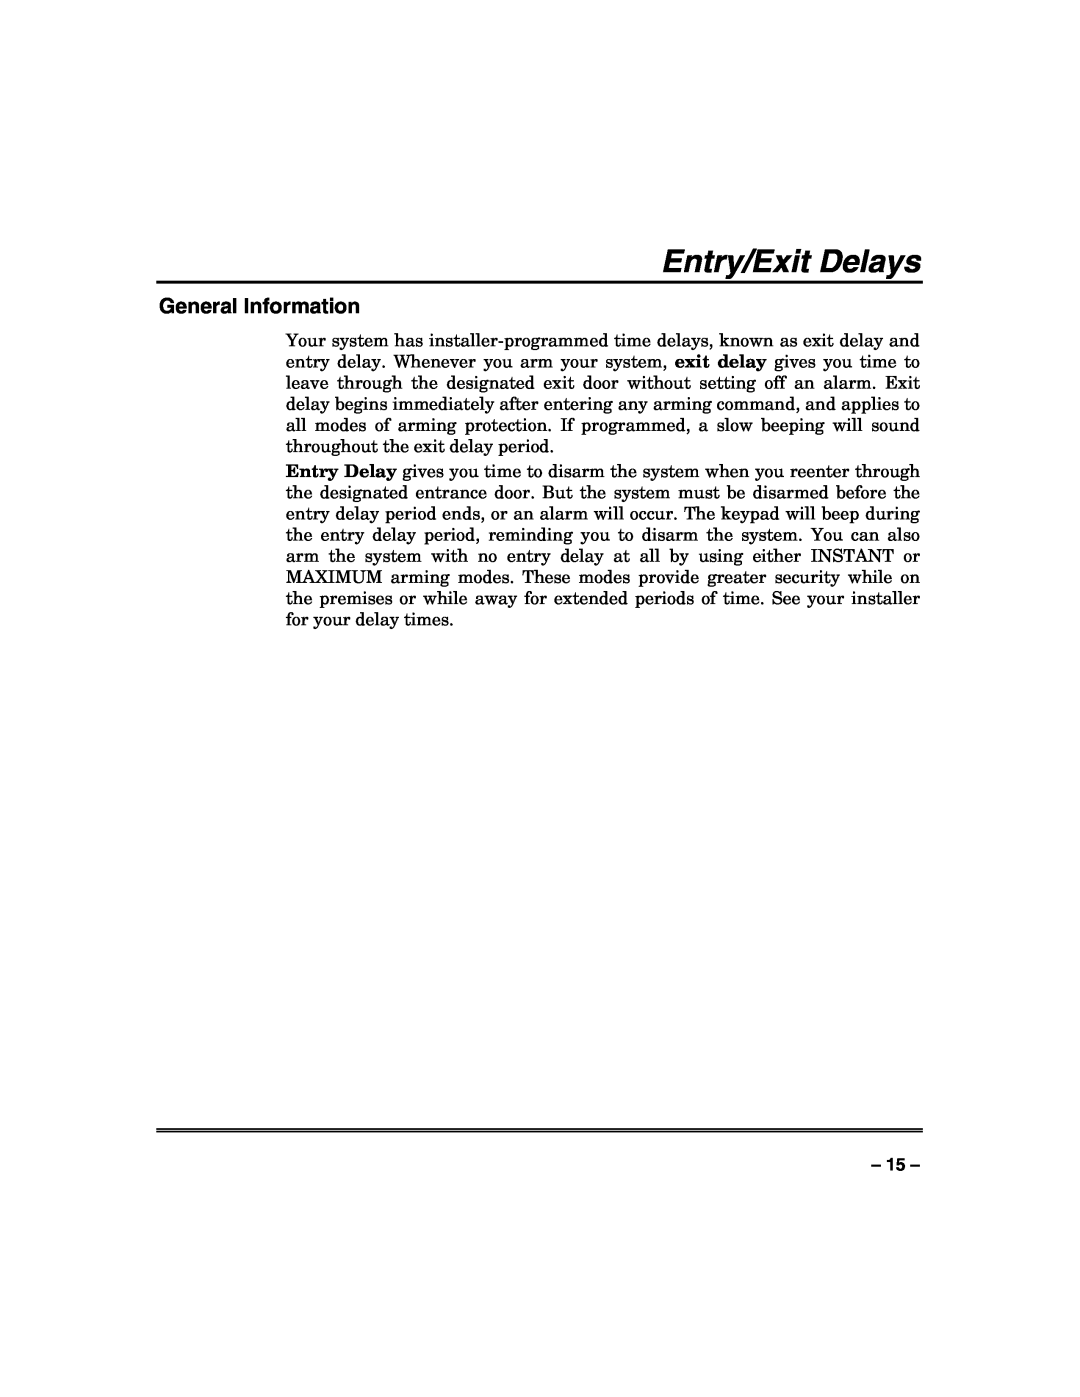 Honeywell VISTA-128FBP, VISTA-250FBP manual Entry/Exit Delays, General Information 